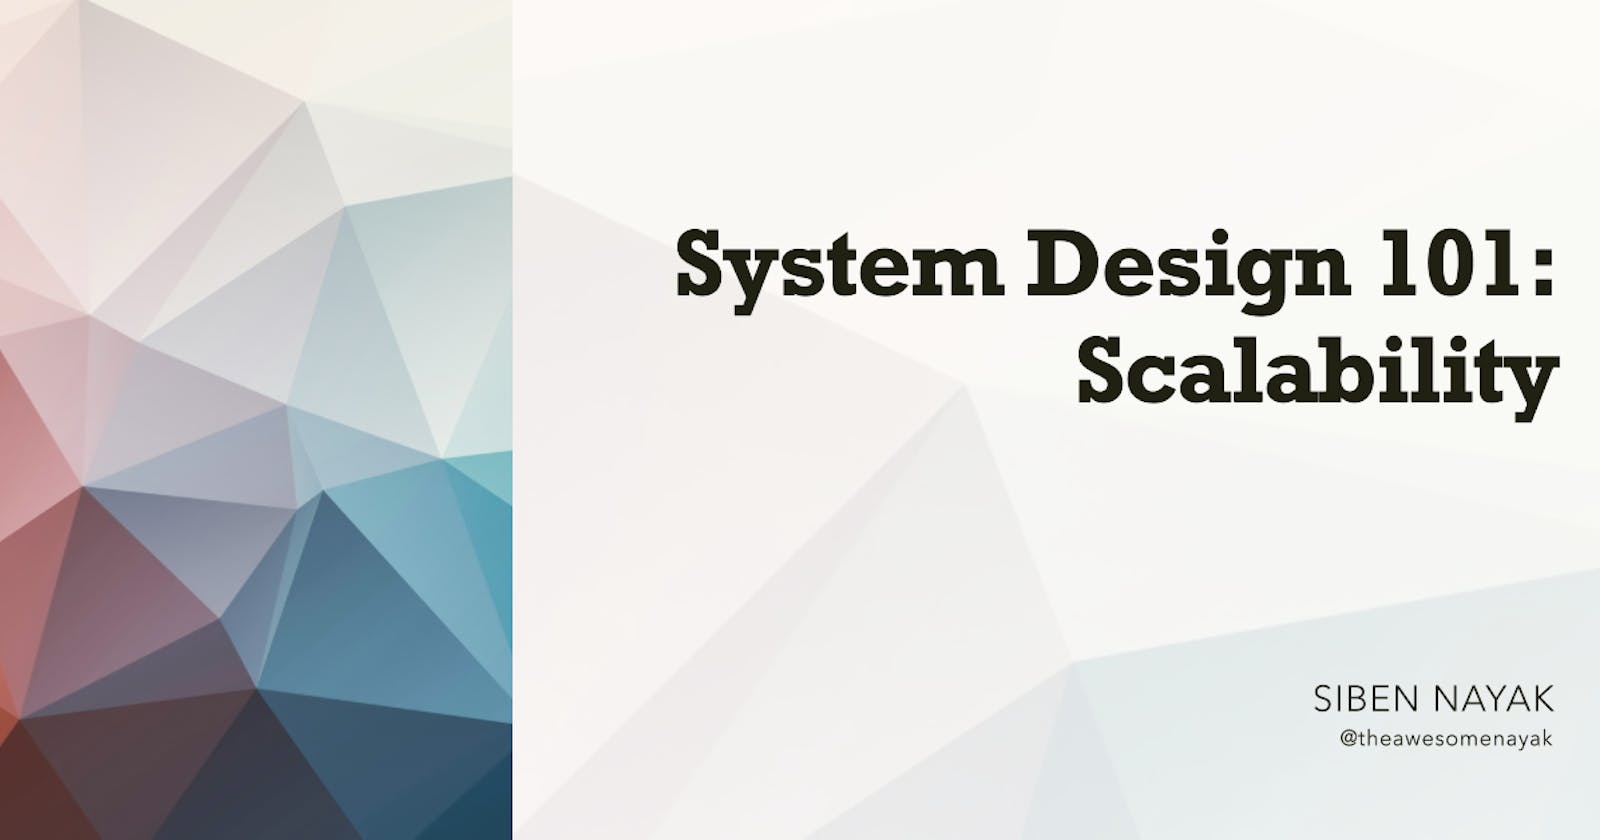 System Design 101 - Scalability